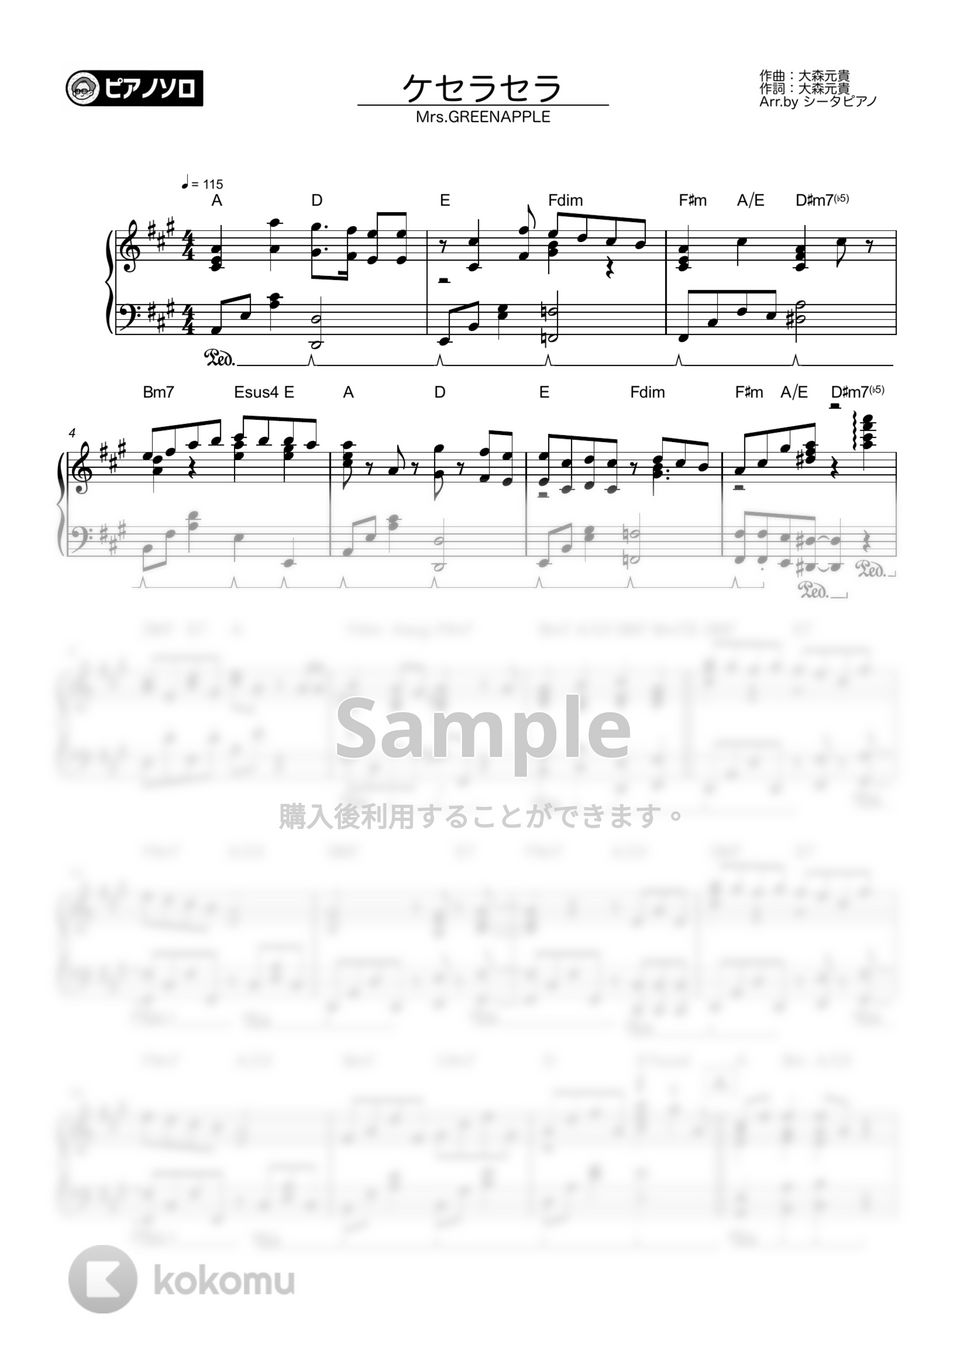 Mrs.GREENAPPLE - ケセラセラ by シータピアノ